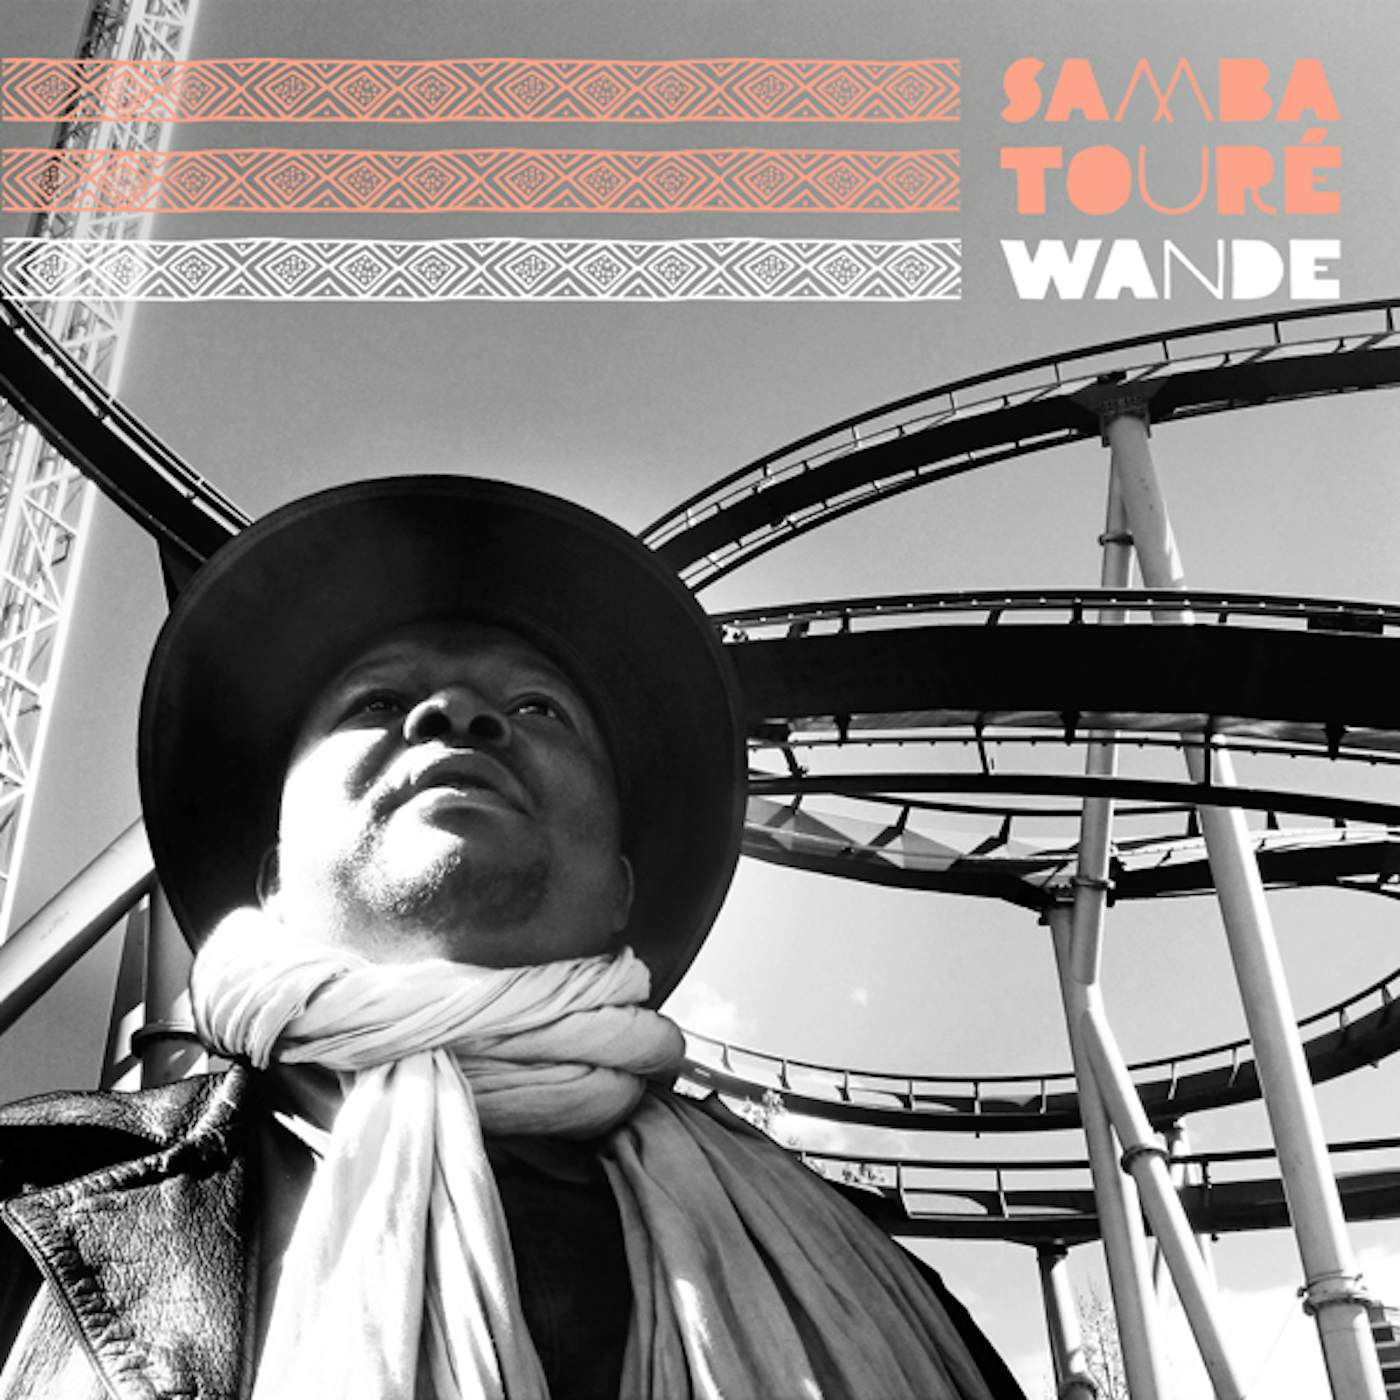 Samba Touré Wande Vinyl Record